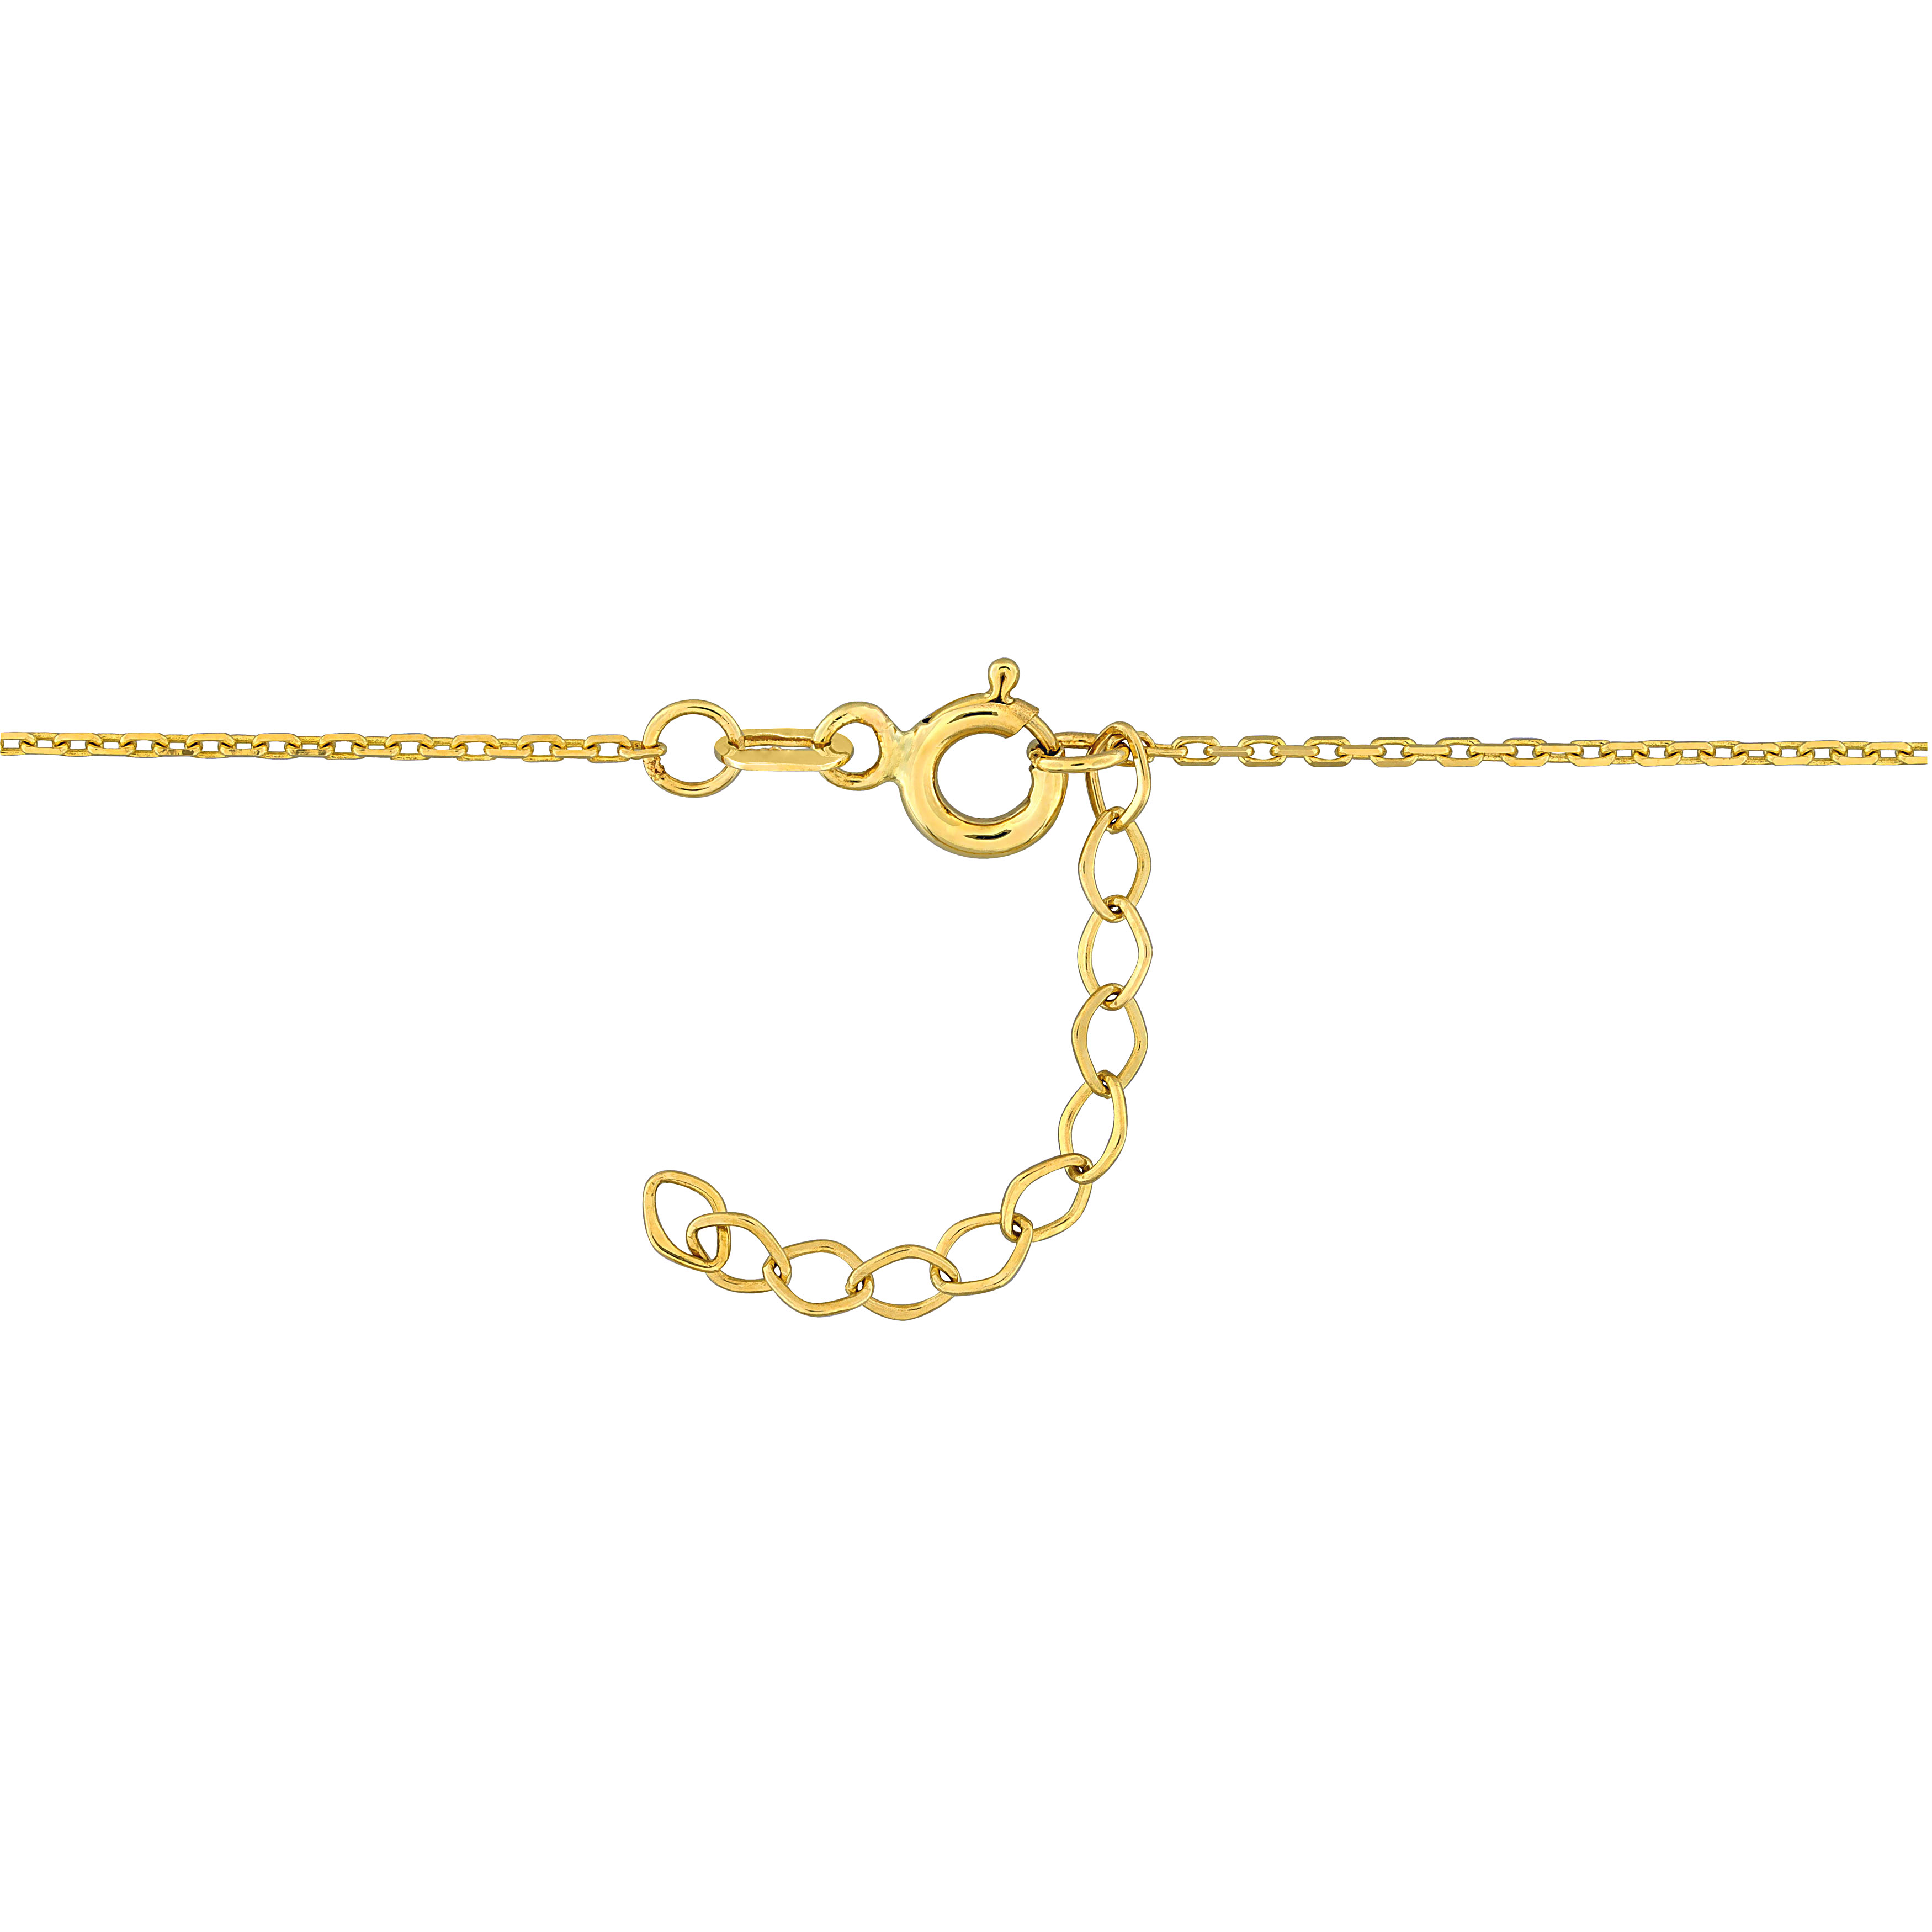 2 CT TGW Pear Shape Blue Sapphire Linear Necklace in 10k Yellow Gold - 16.5 in.